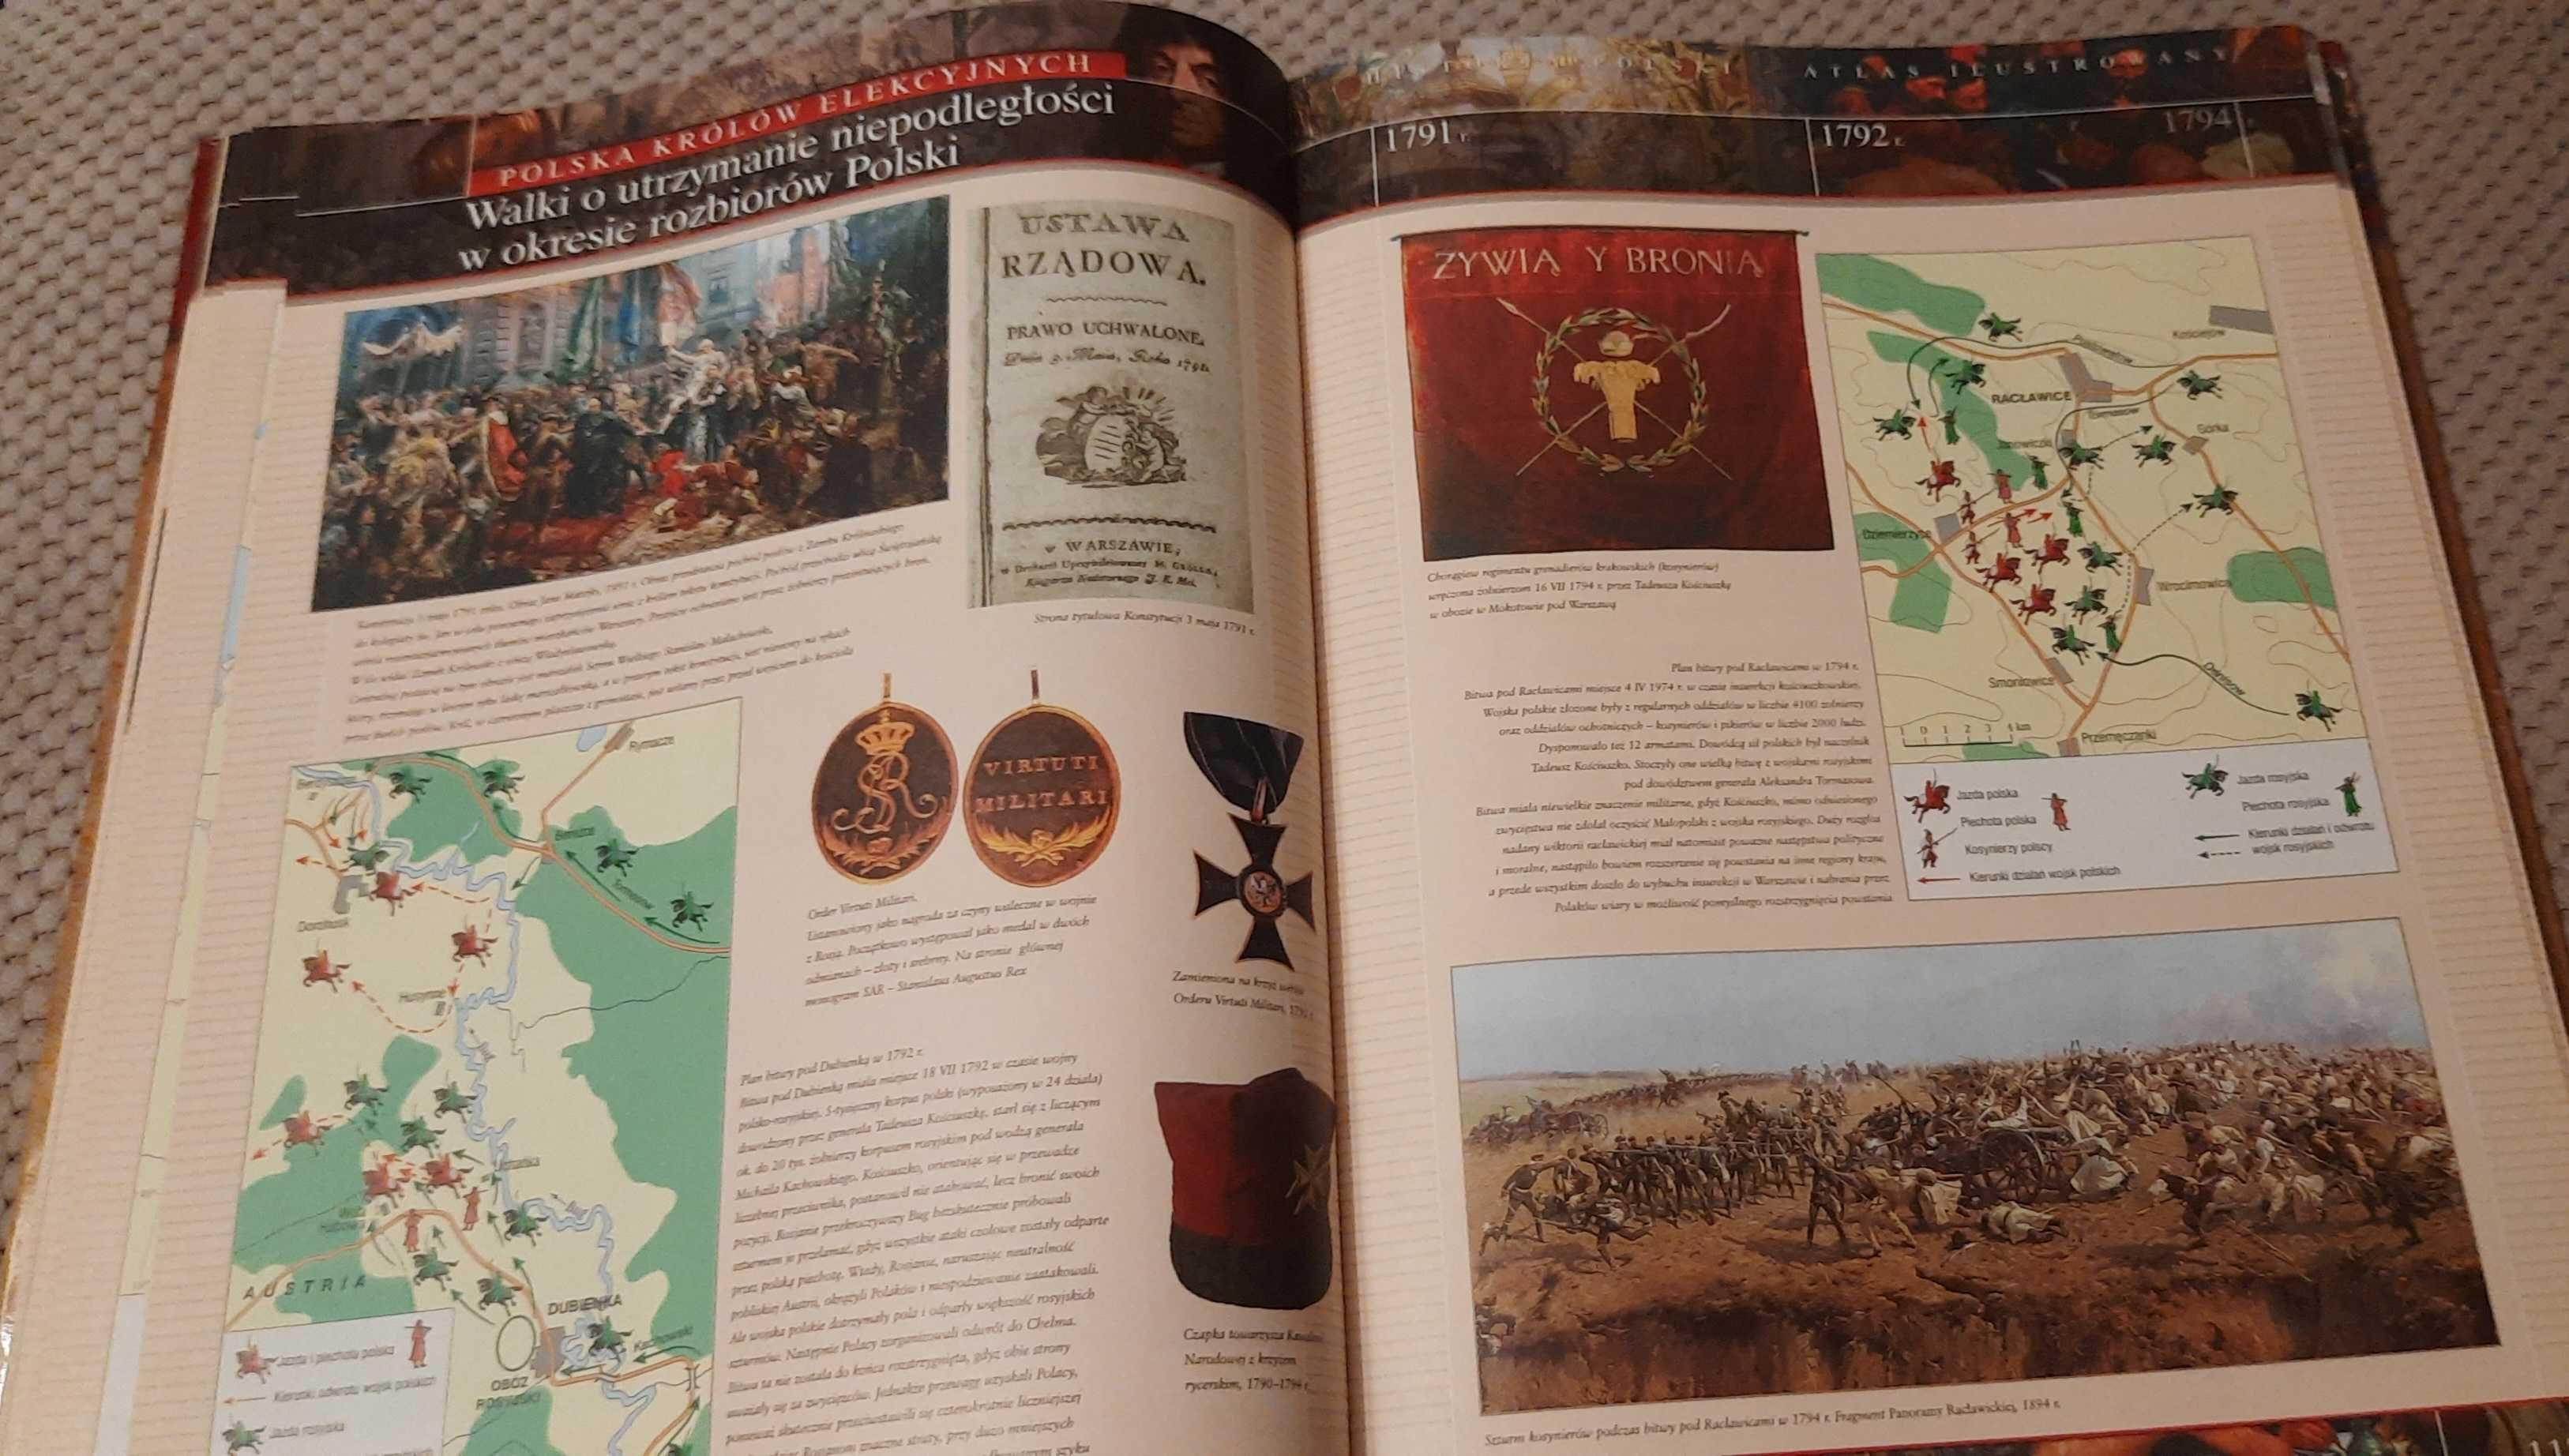 Historyczny Atlas Polski